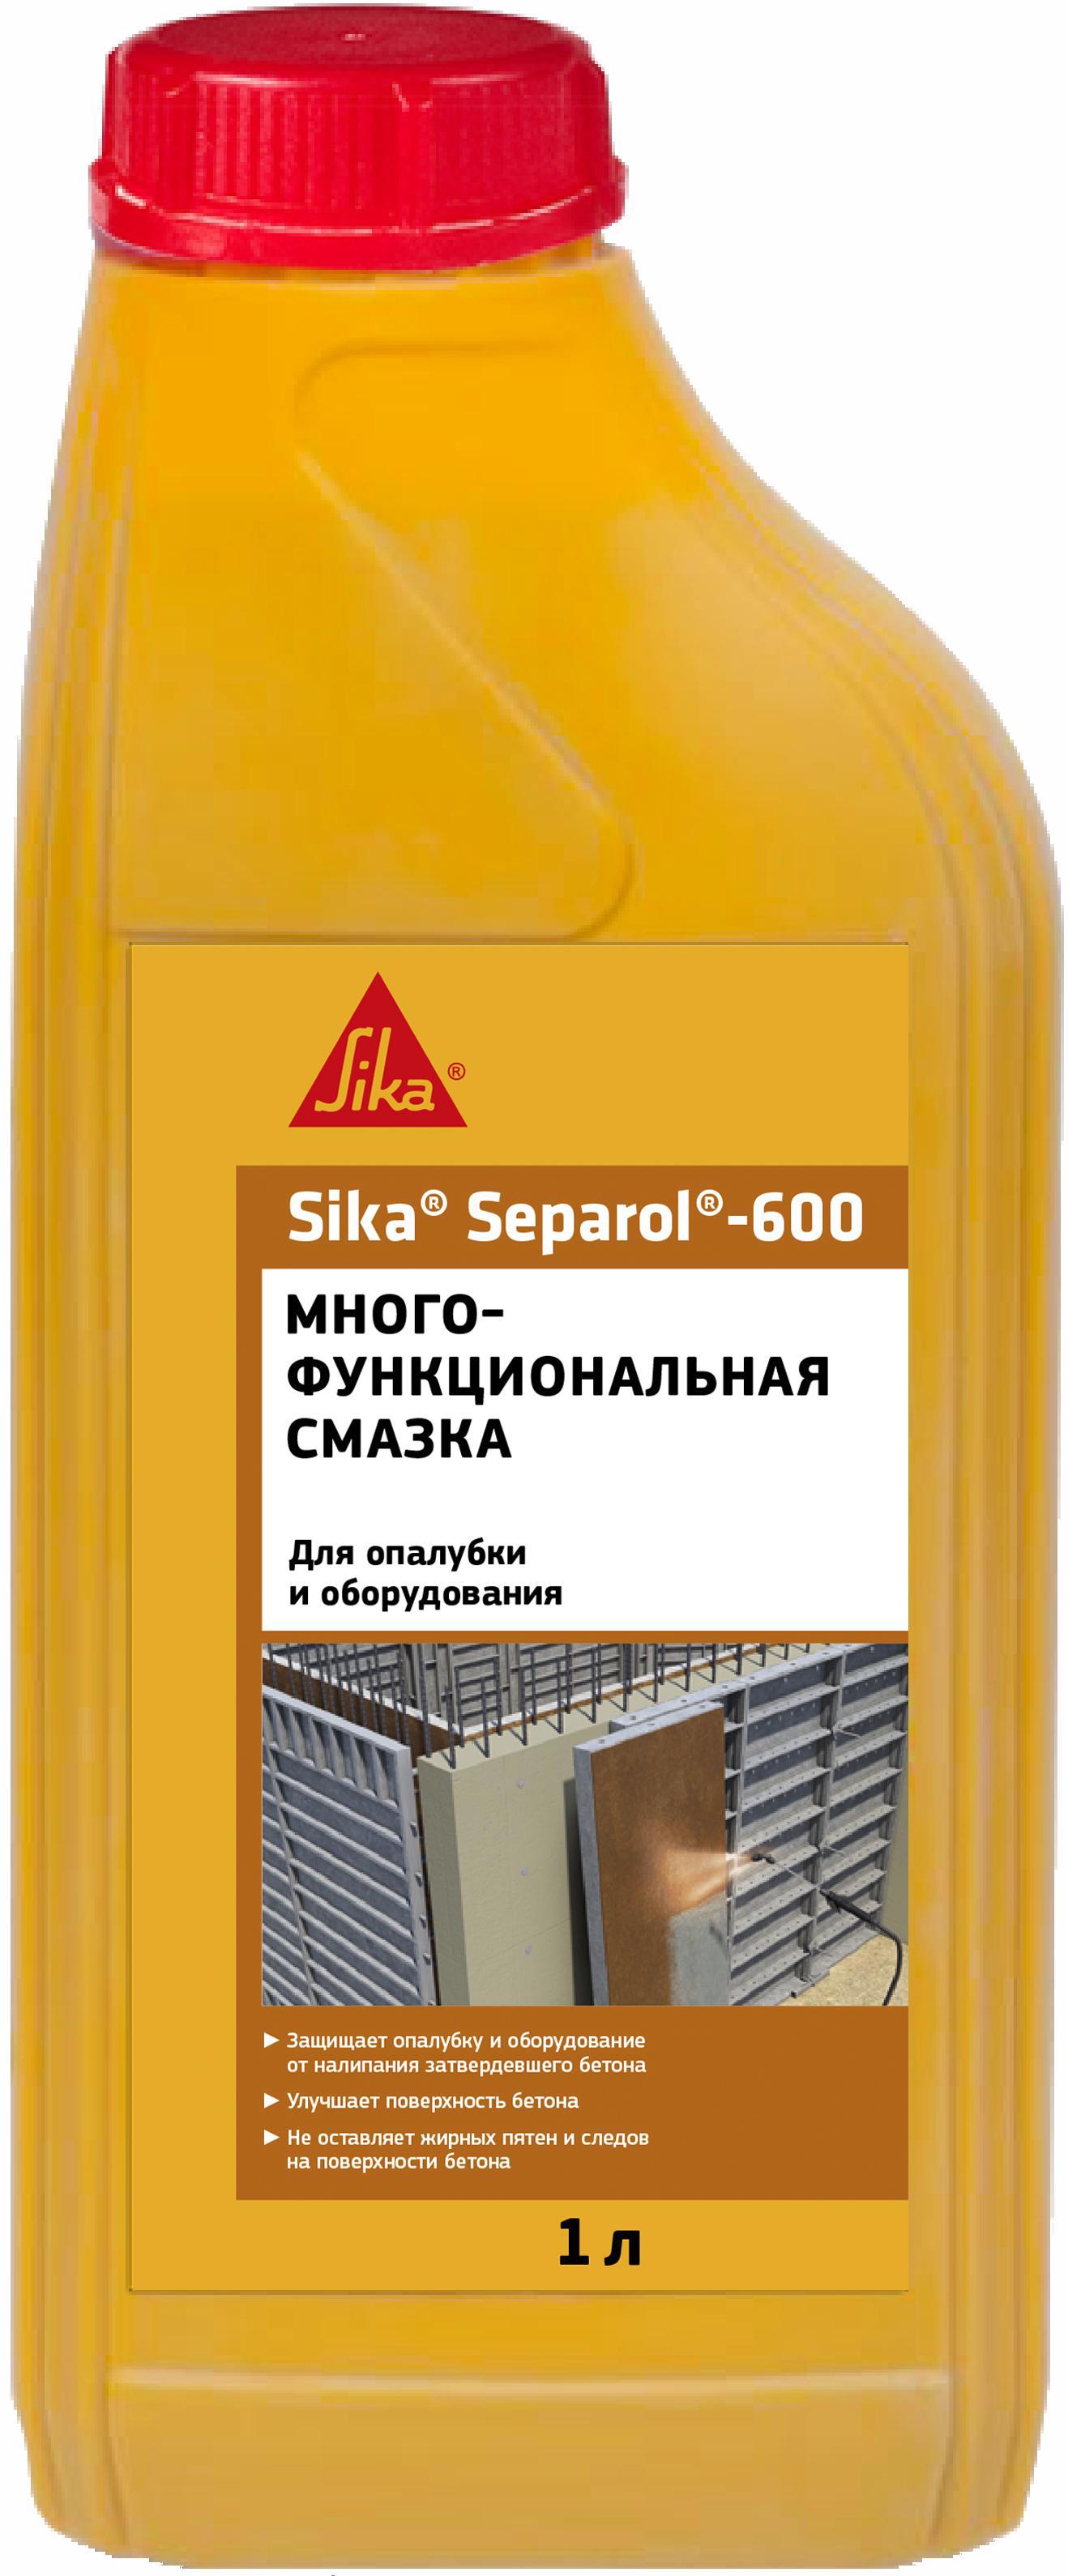 90260634 Смазка синтетическая Separol-600 для форм и опалубки 1 л STLM-0153546 SIKA